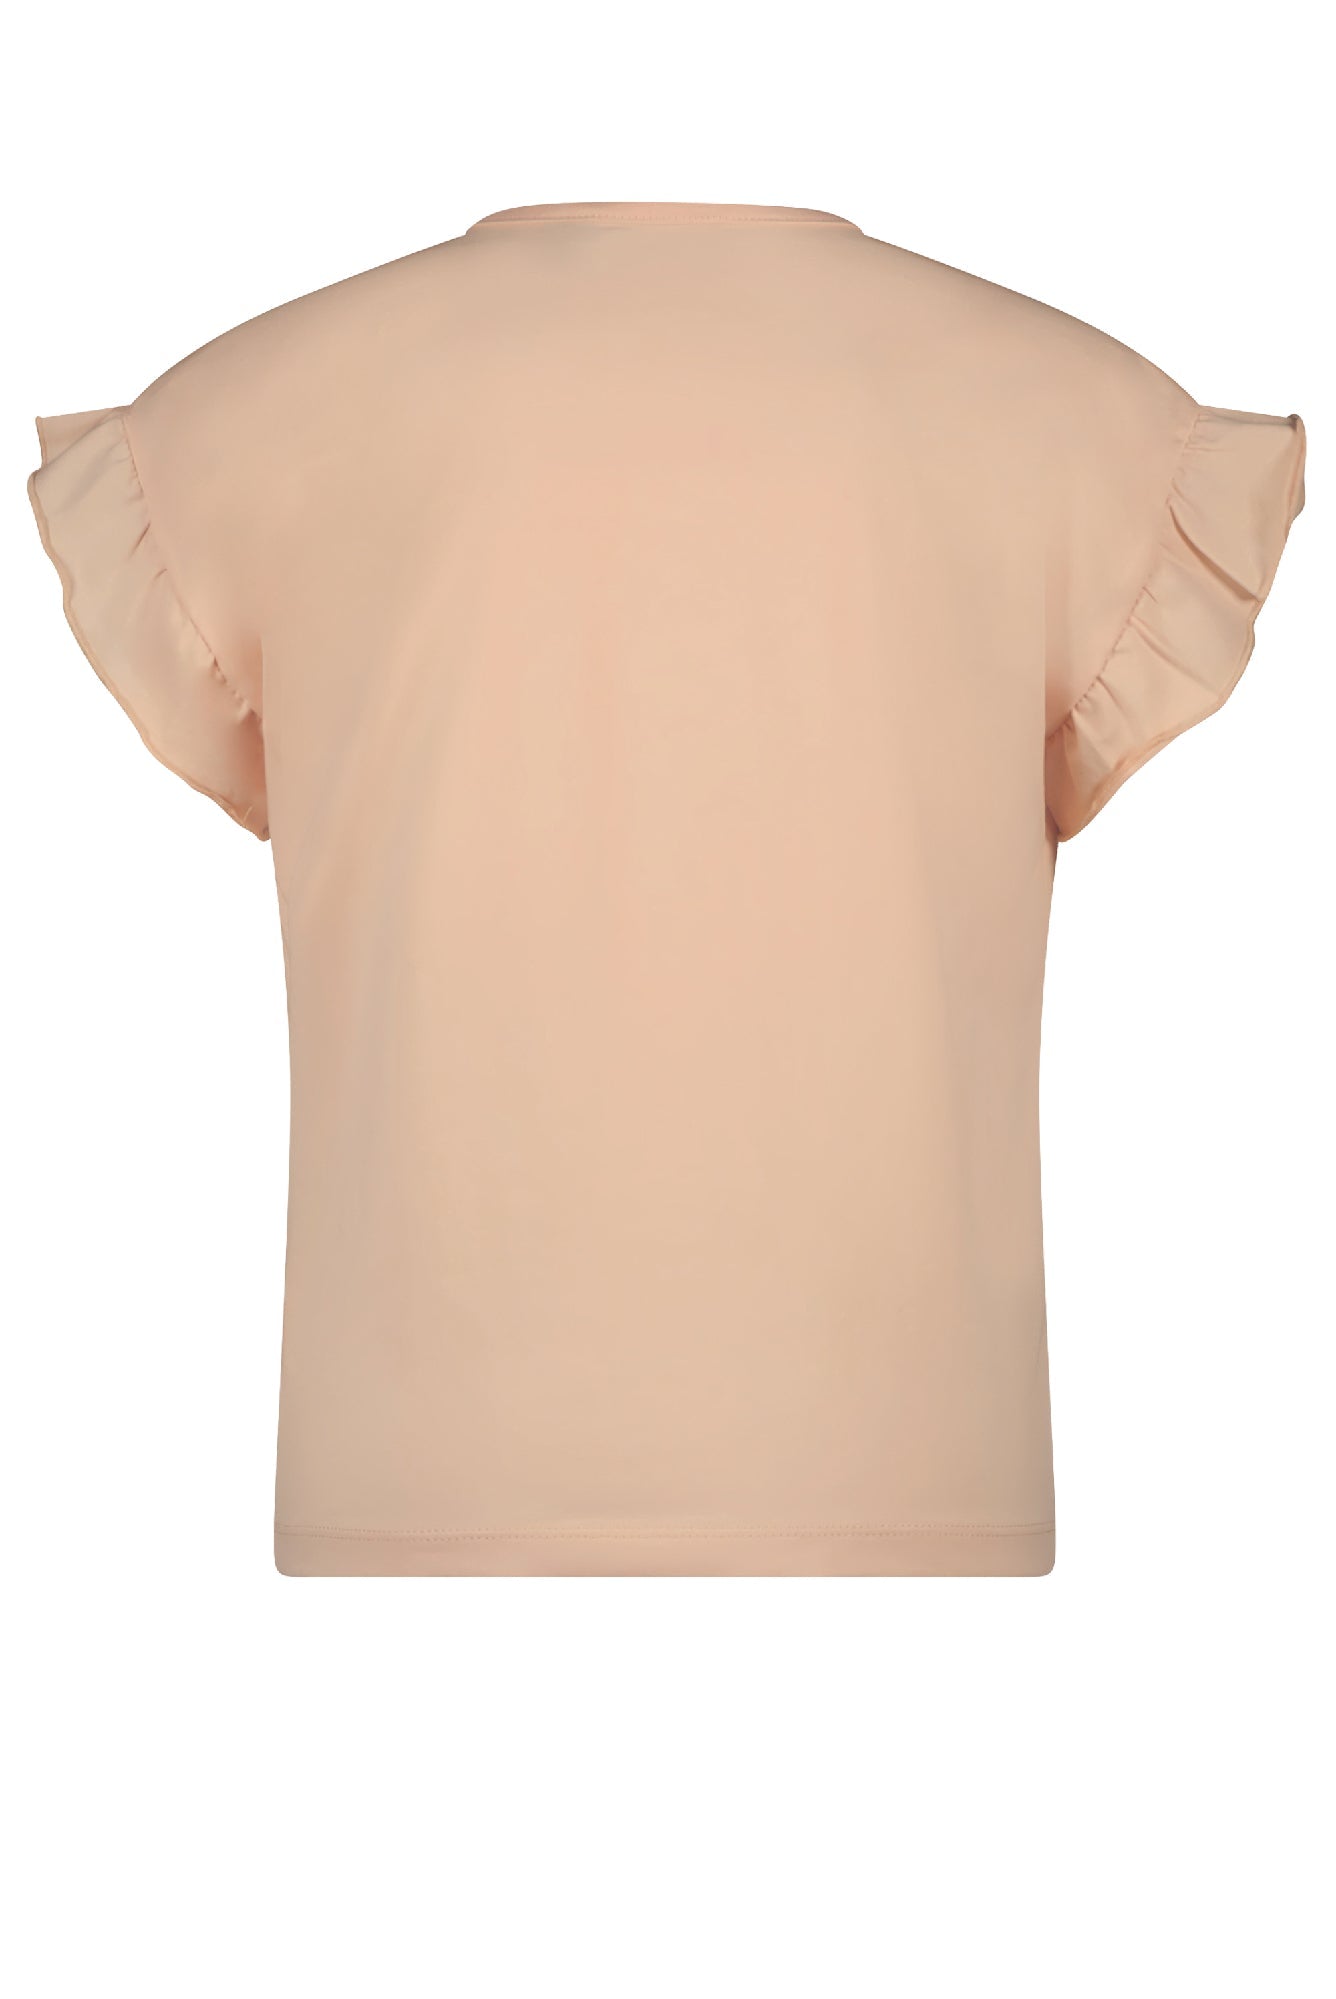 Meisjes Kanou tshirt short ruffled sleeve with Follow print van NoNo in de kleur Rosy Sand in maat 134-140.